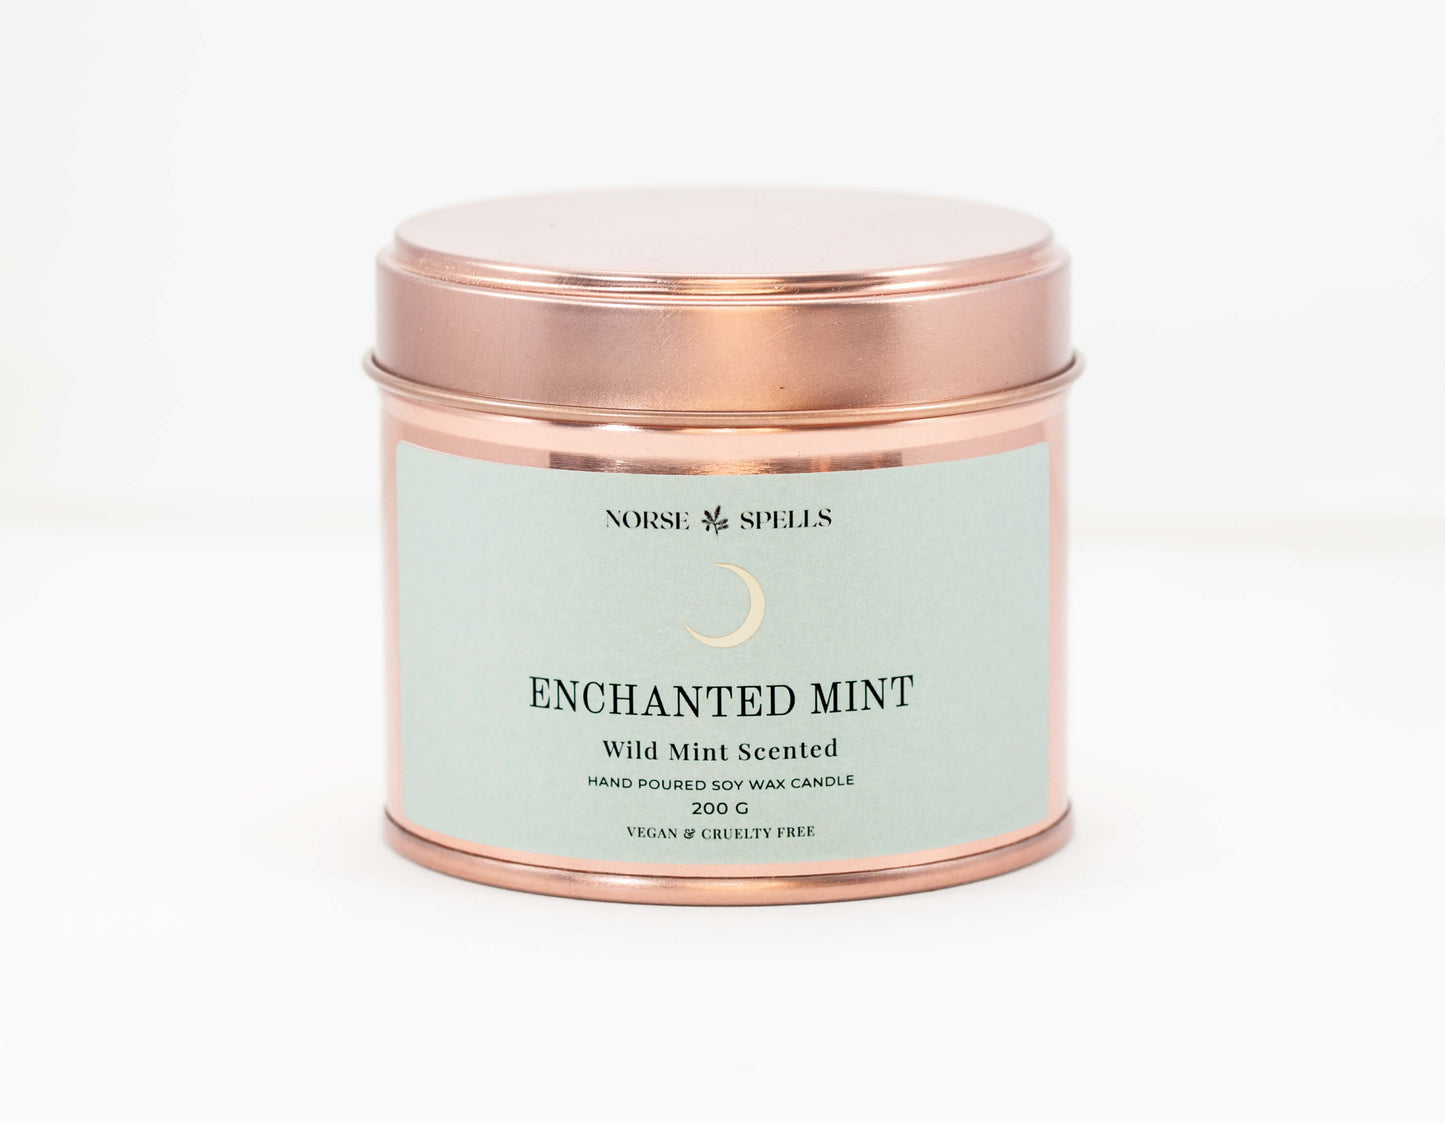 NORSE SPELLS - Enchanted Mint